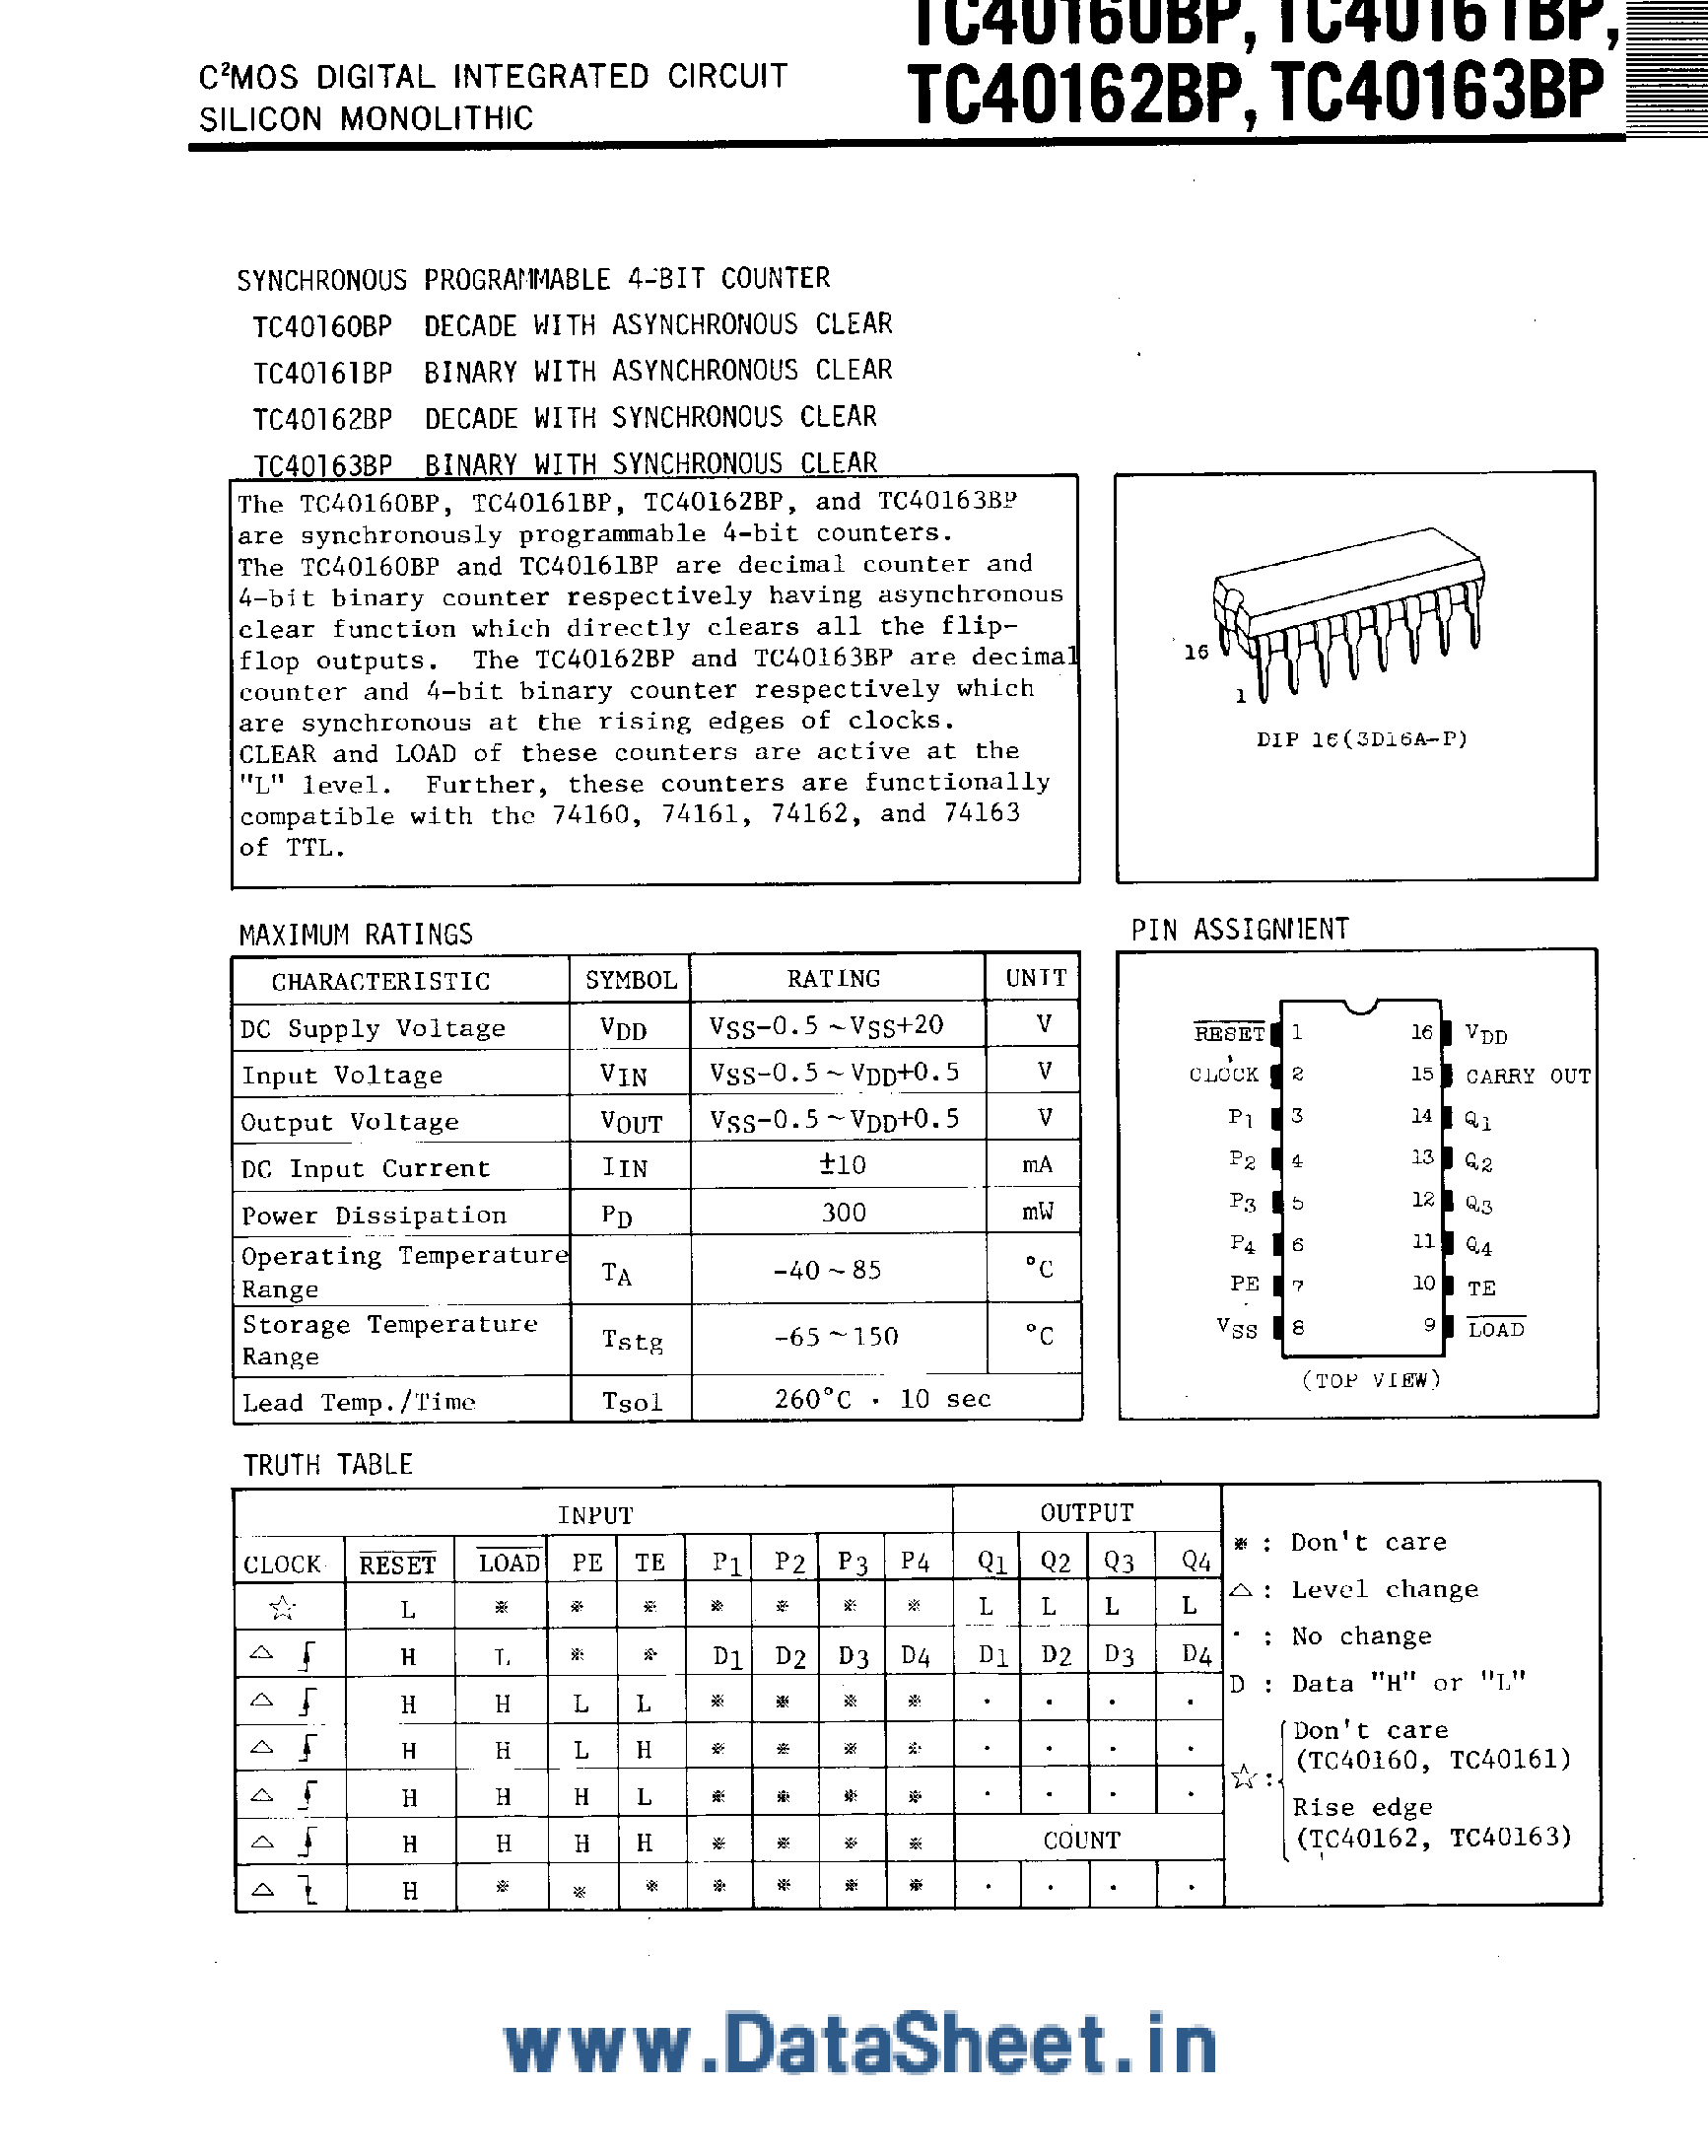 Datasheet TC40160BP - (TC40160BP - TC40163BP) Synchronous Programmable 4-Bit Counter page 1